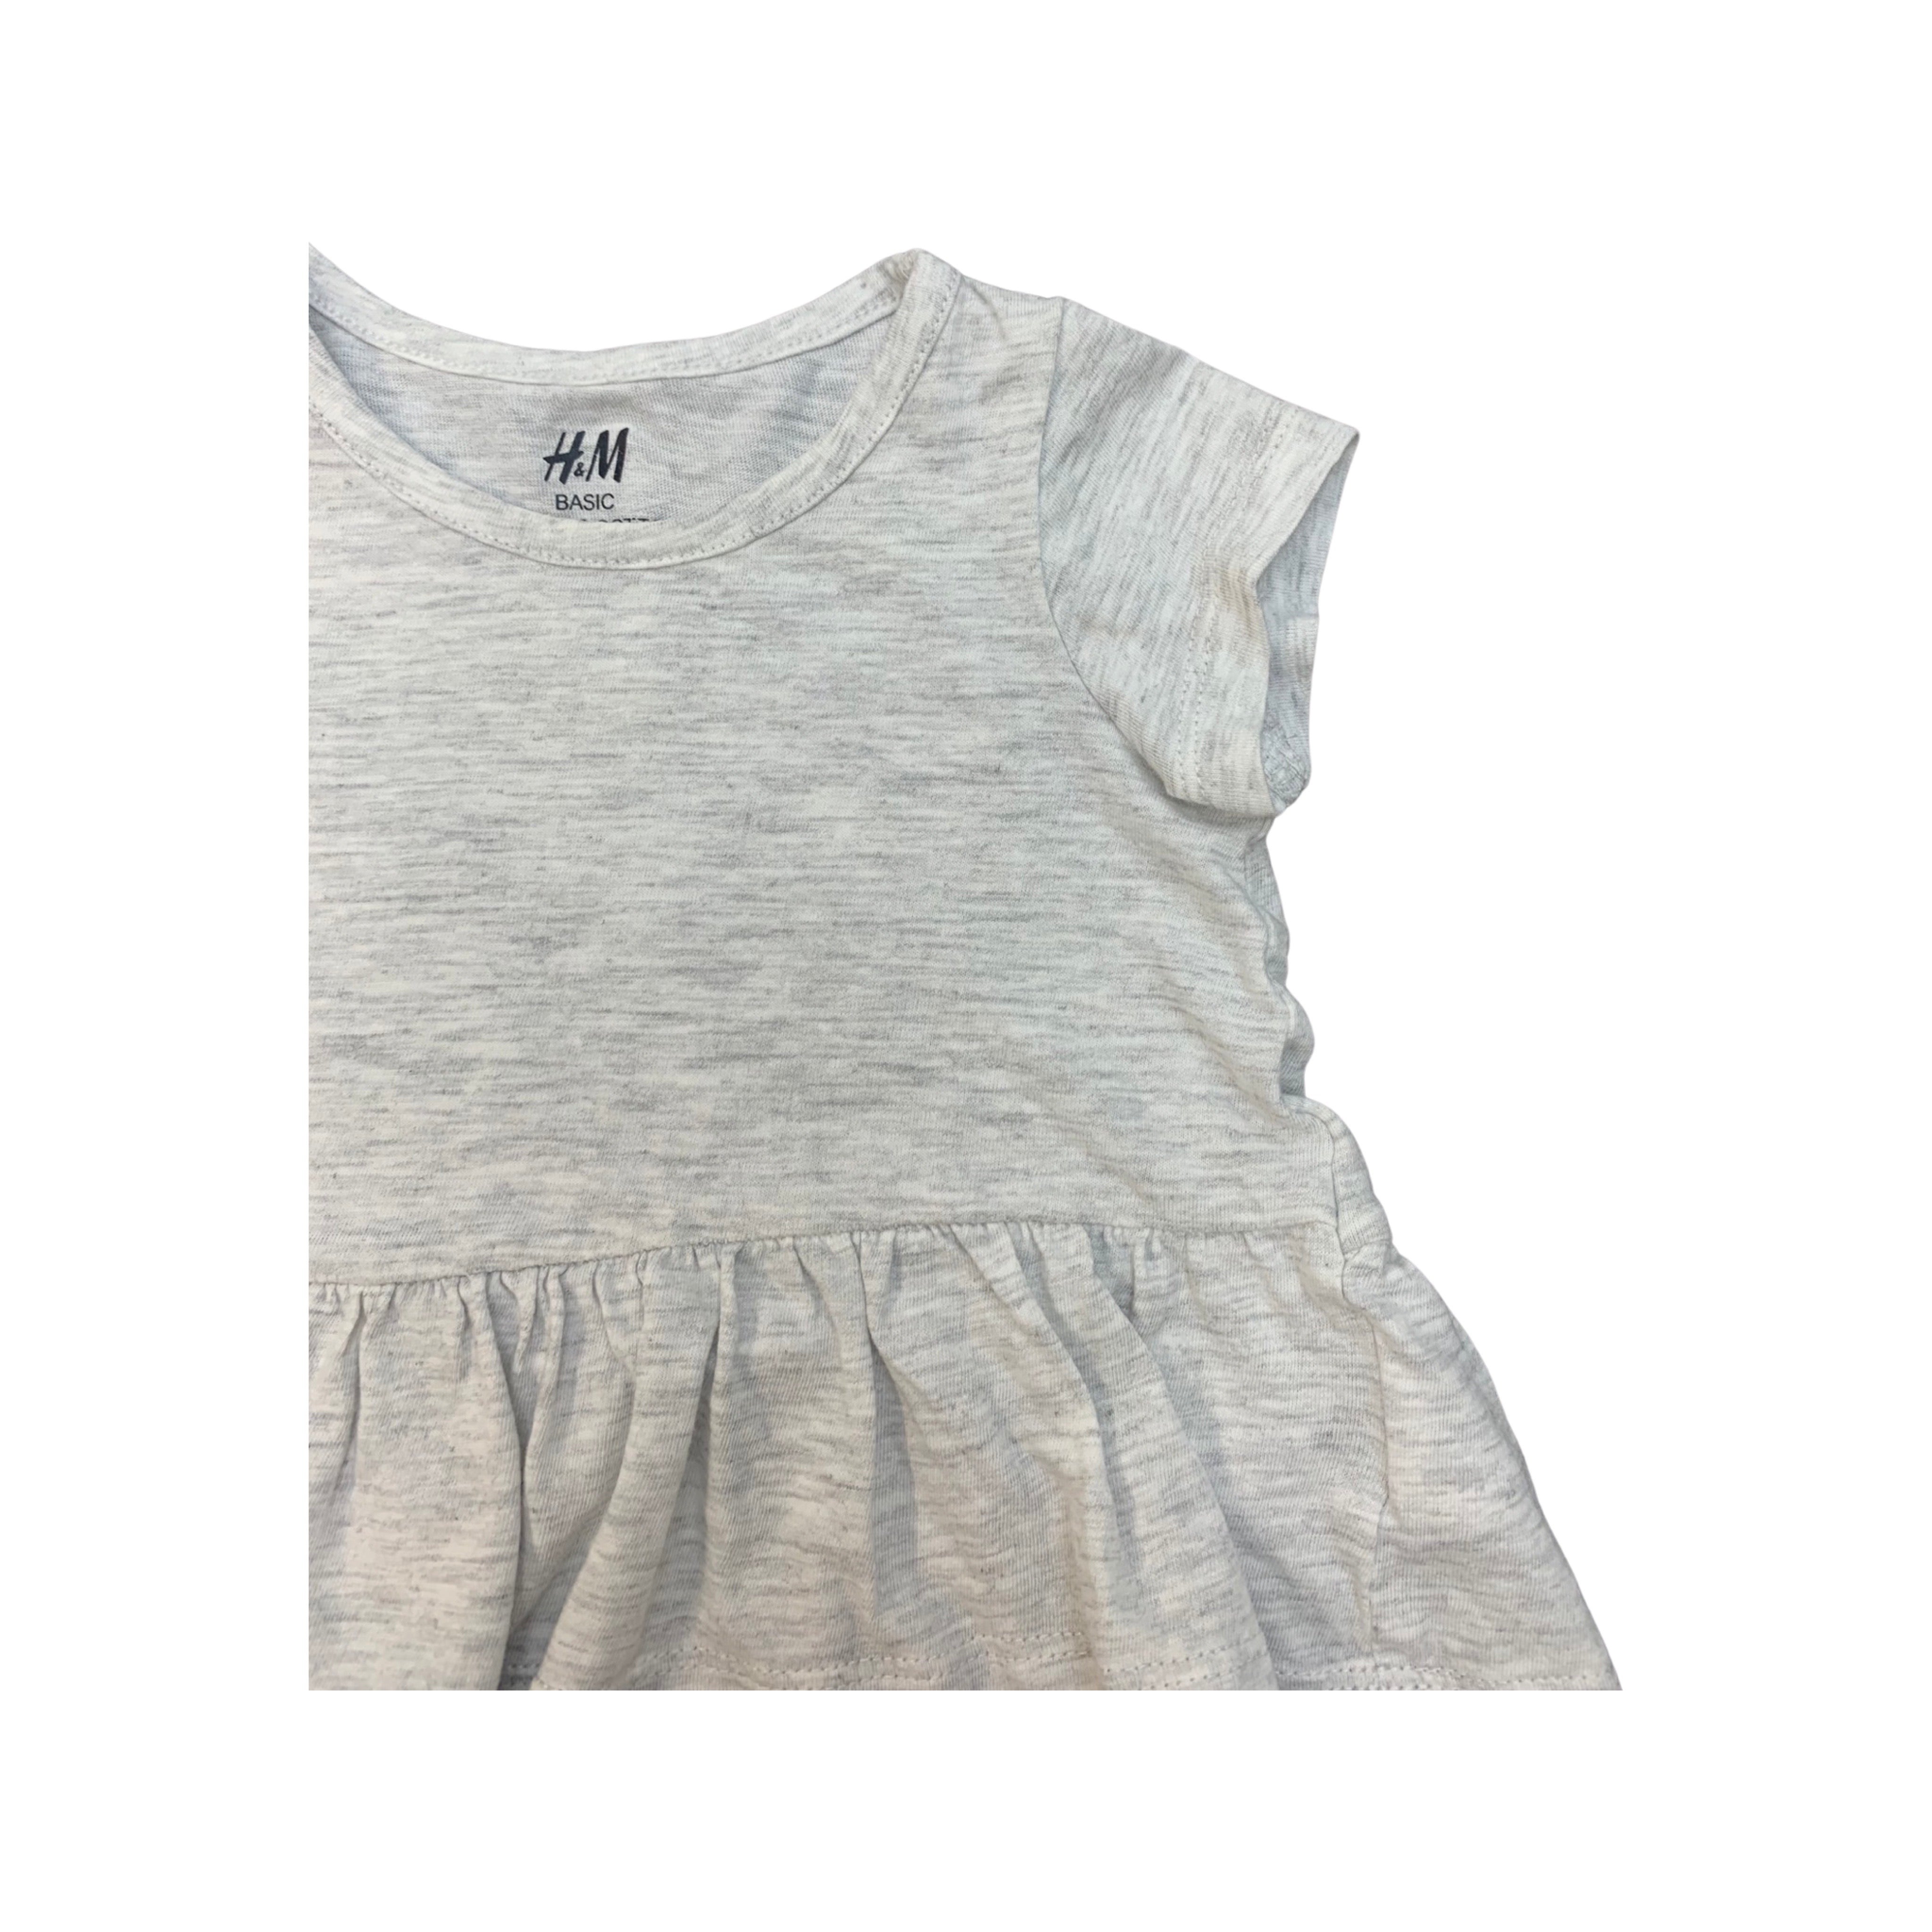 H&M Basic Short Sleeve Top Baby Girl 1-2 Months/56cm